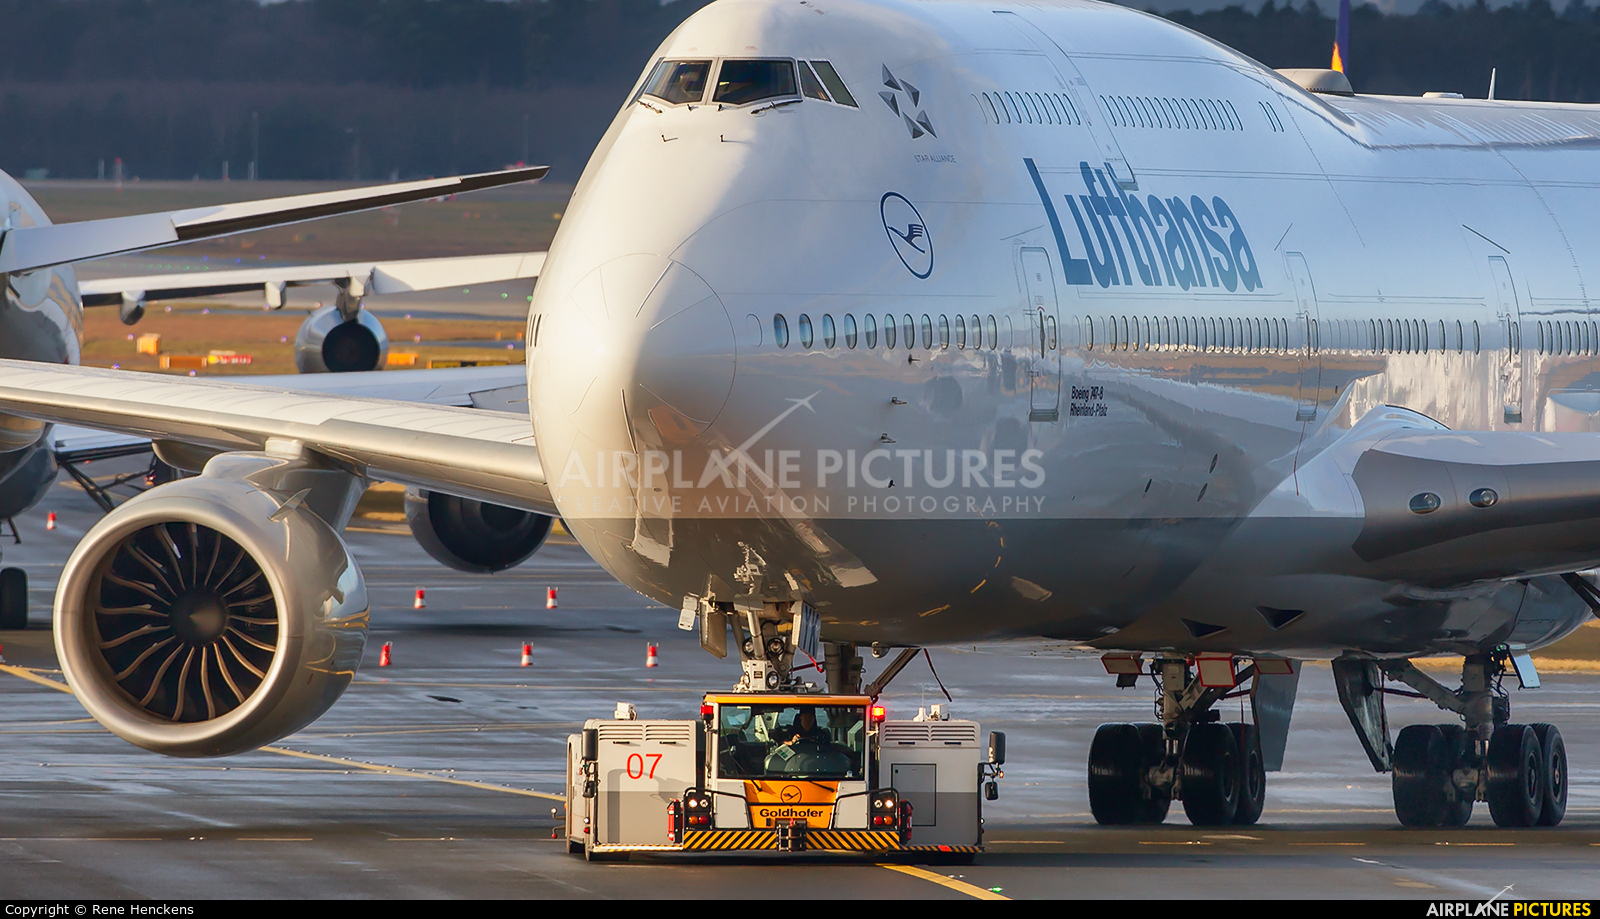 Lufthansa D-ABYK aircraft at Frankfurt